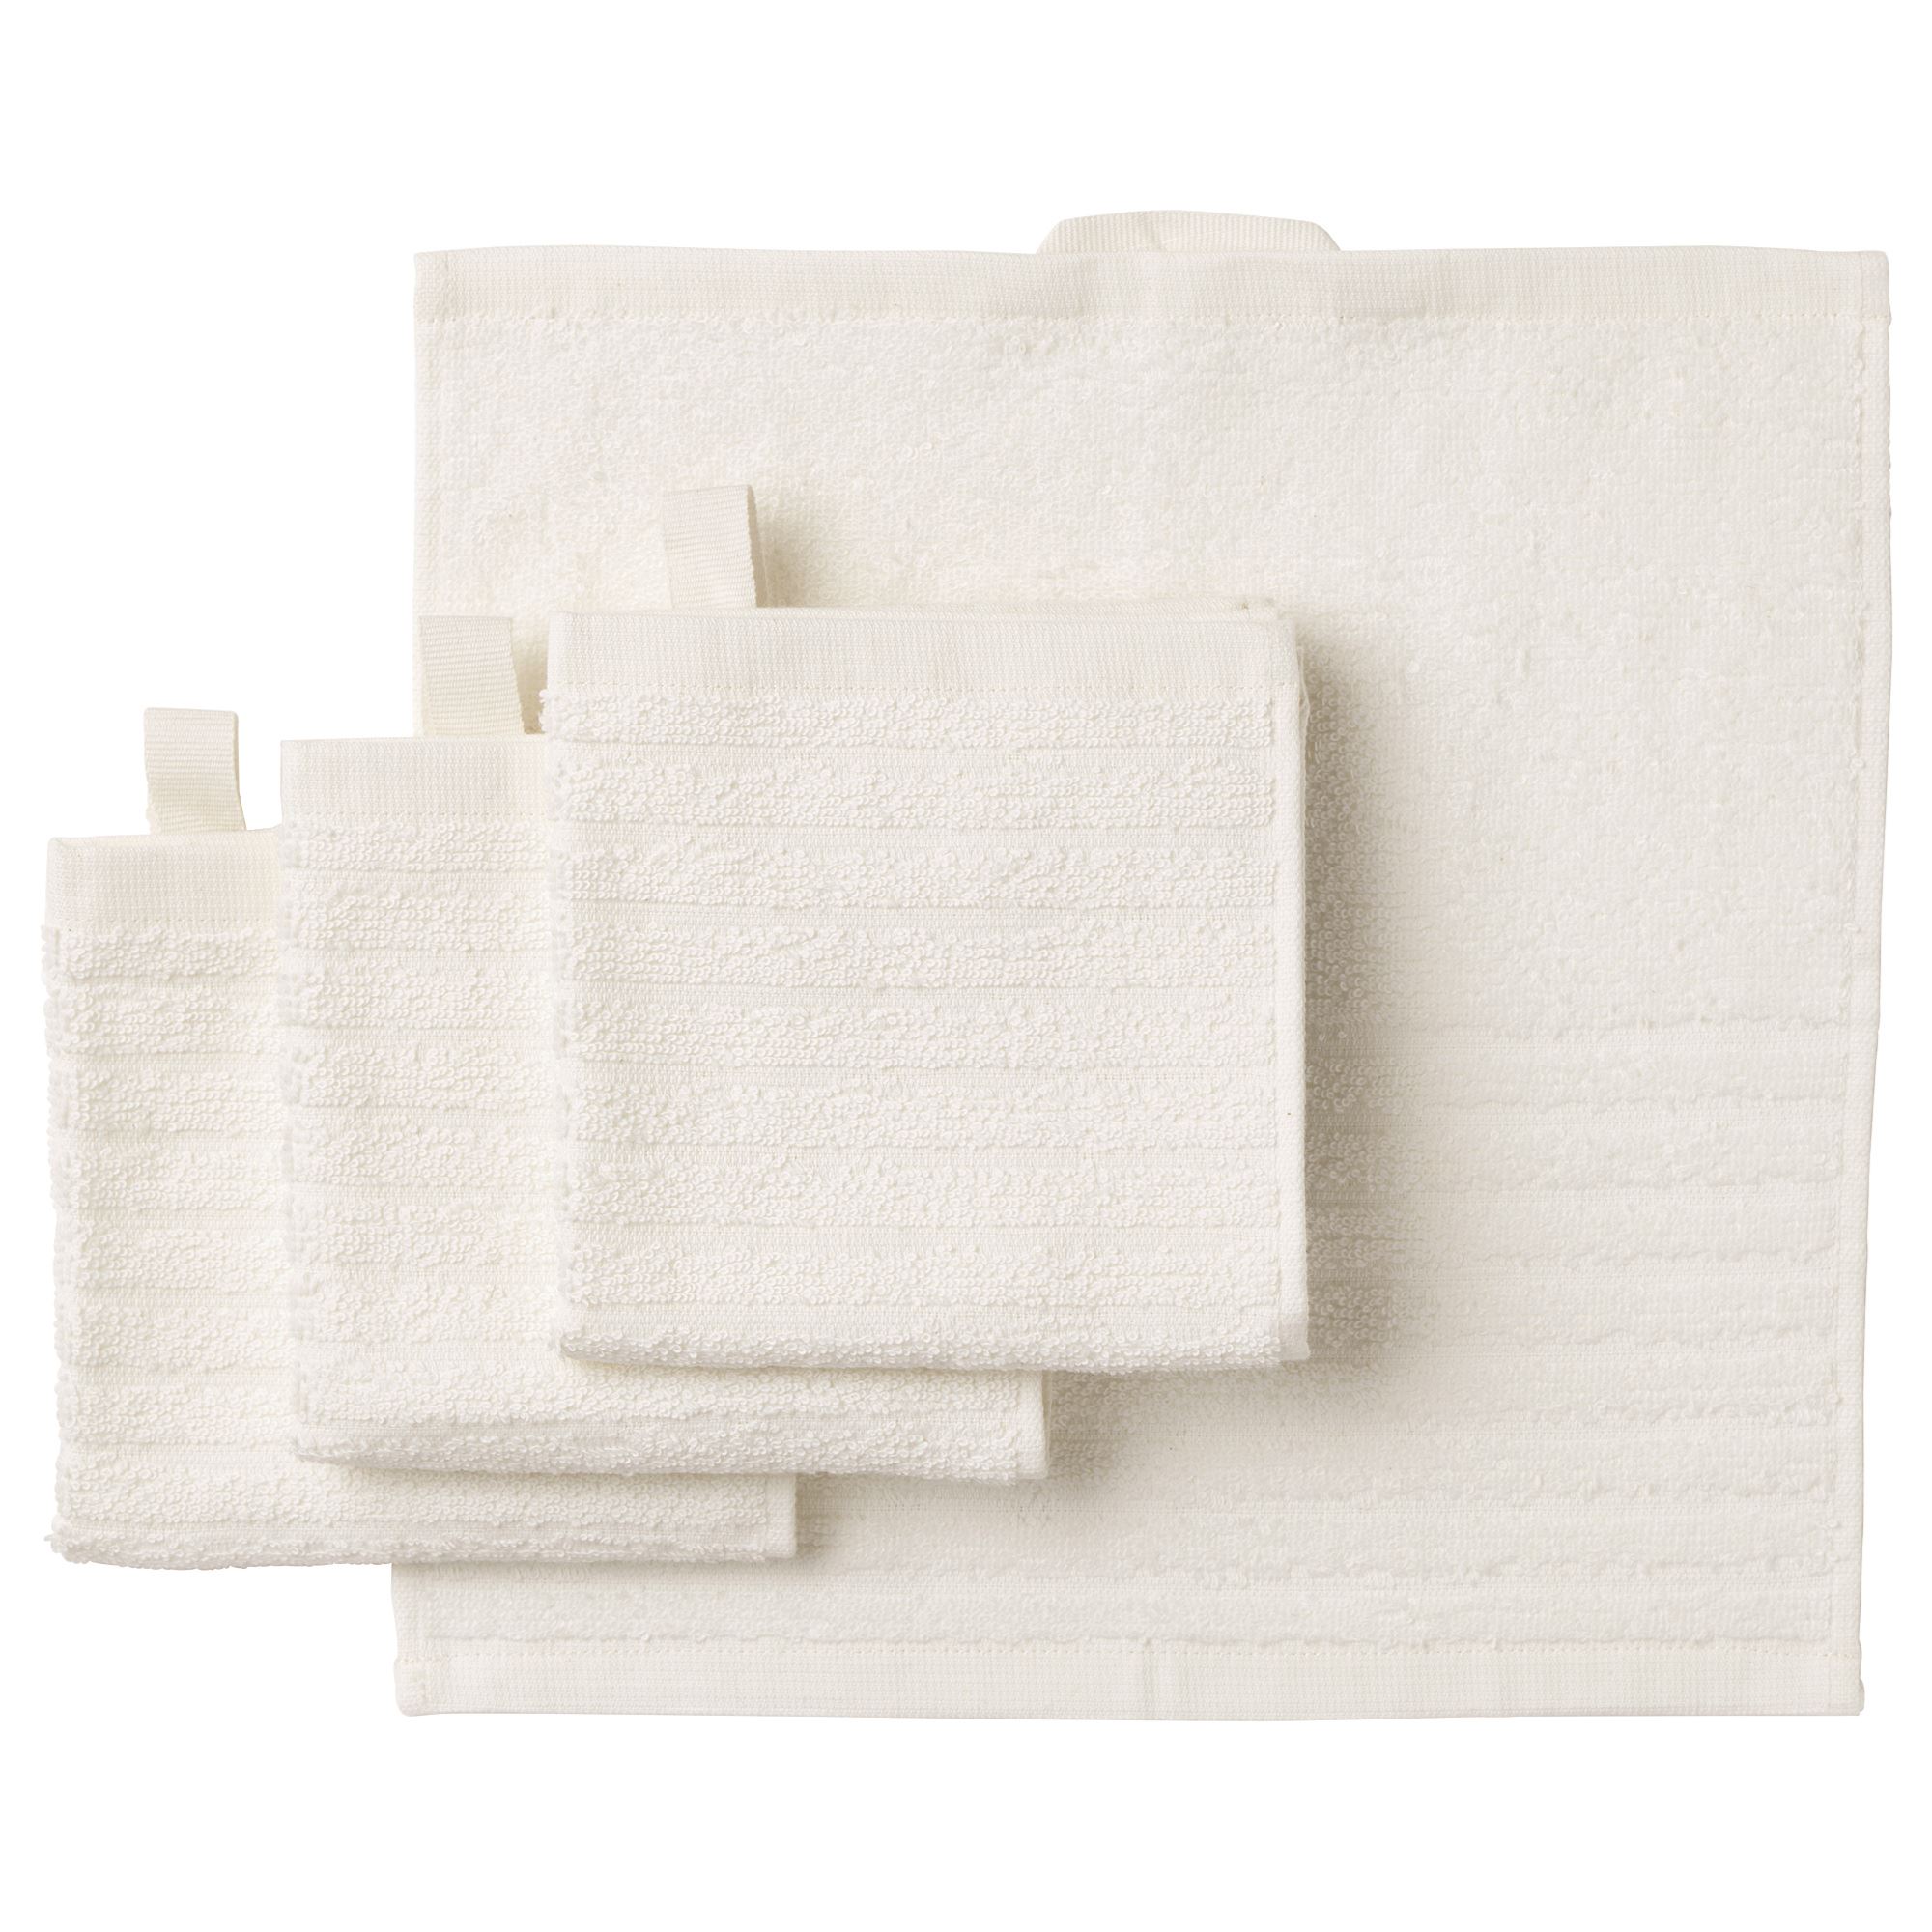 VAGSJN hand towel white 30x30 cm  IKEA Bathroom